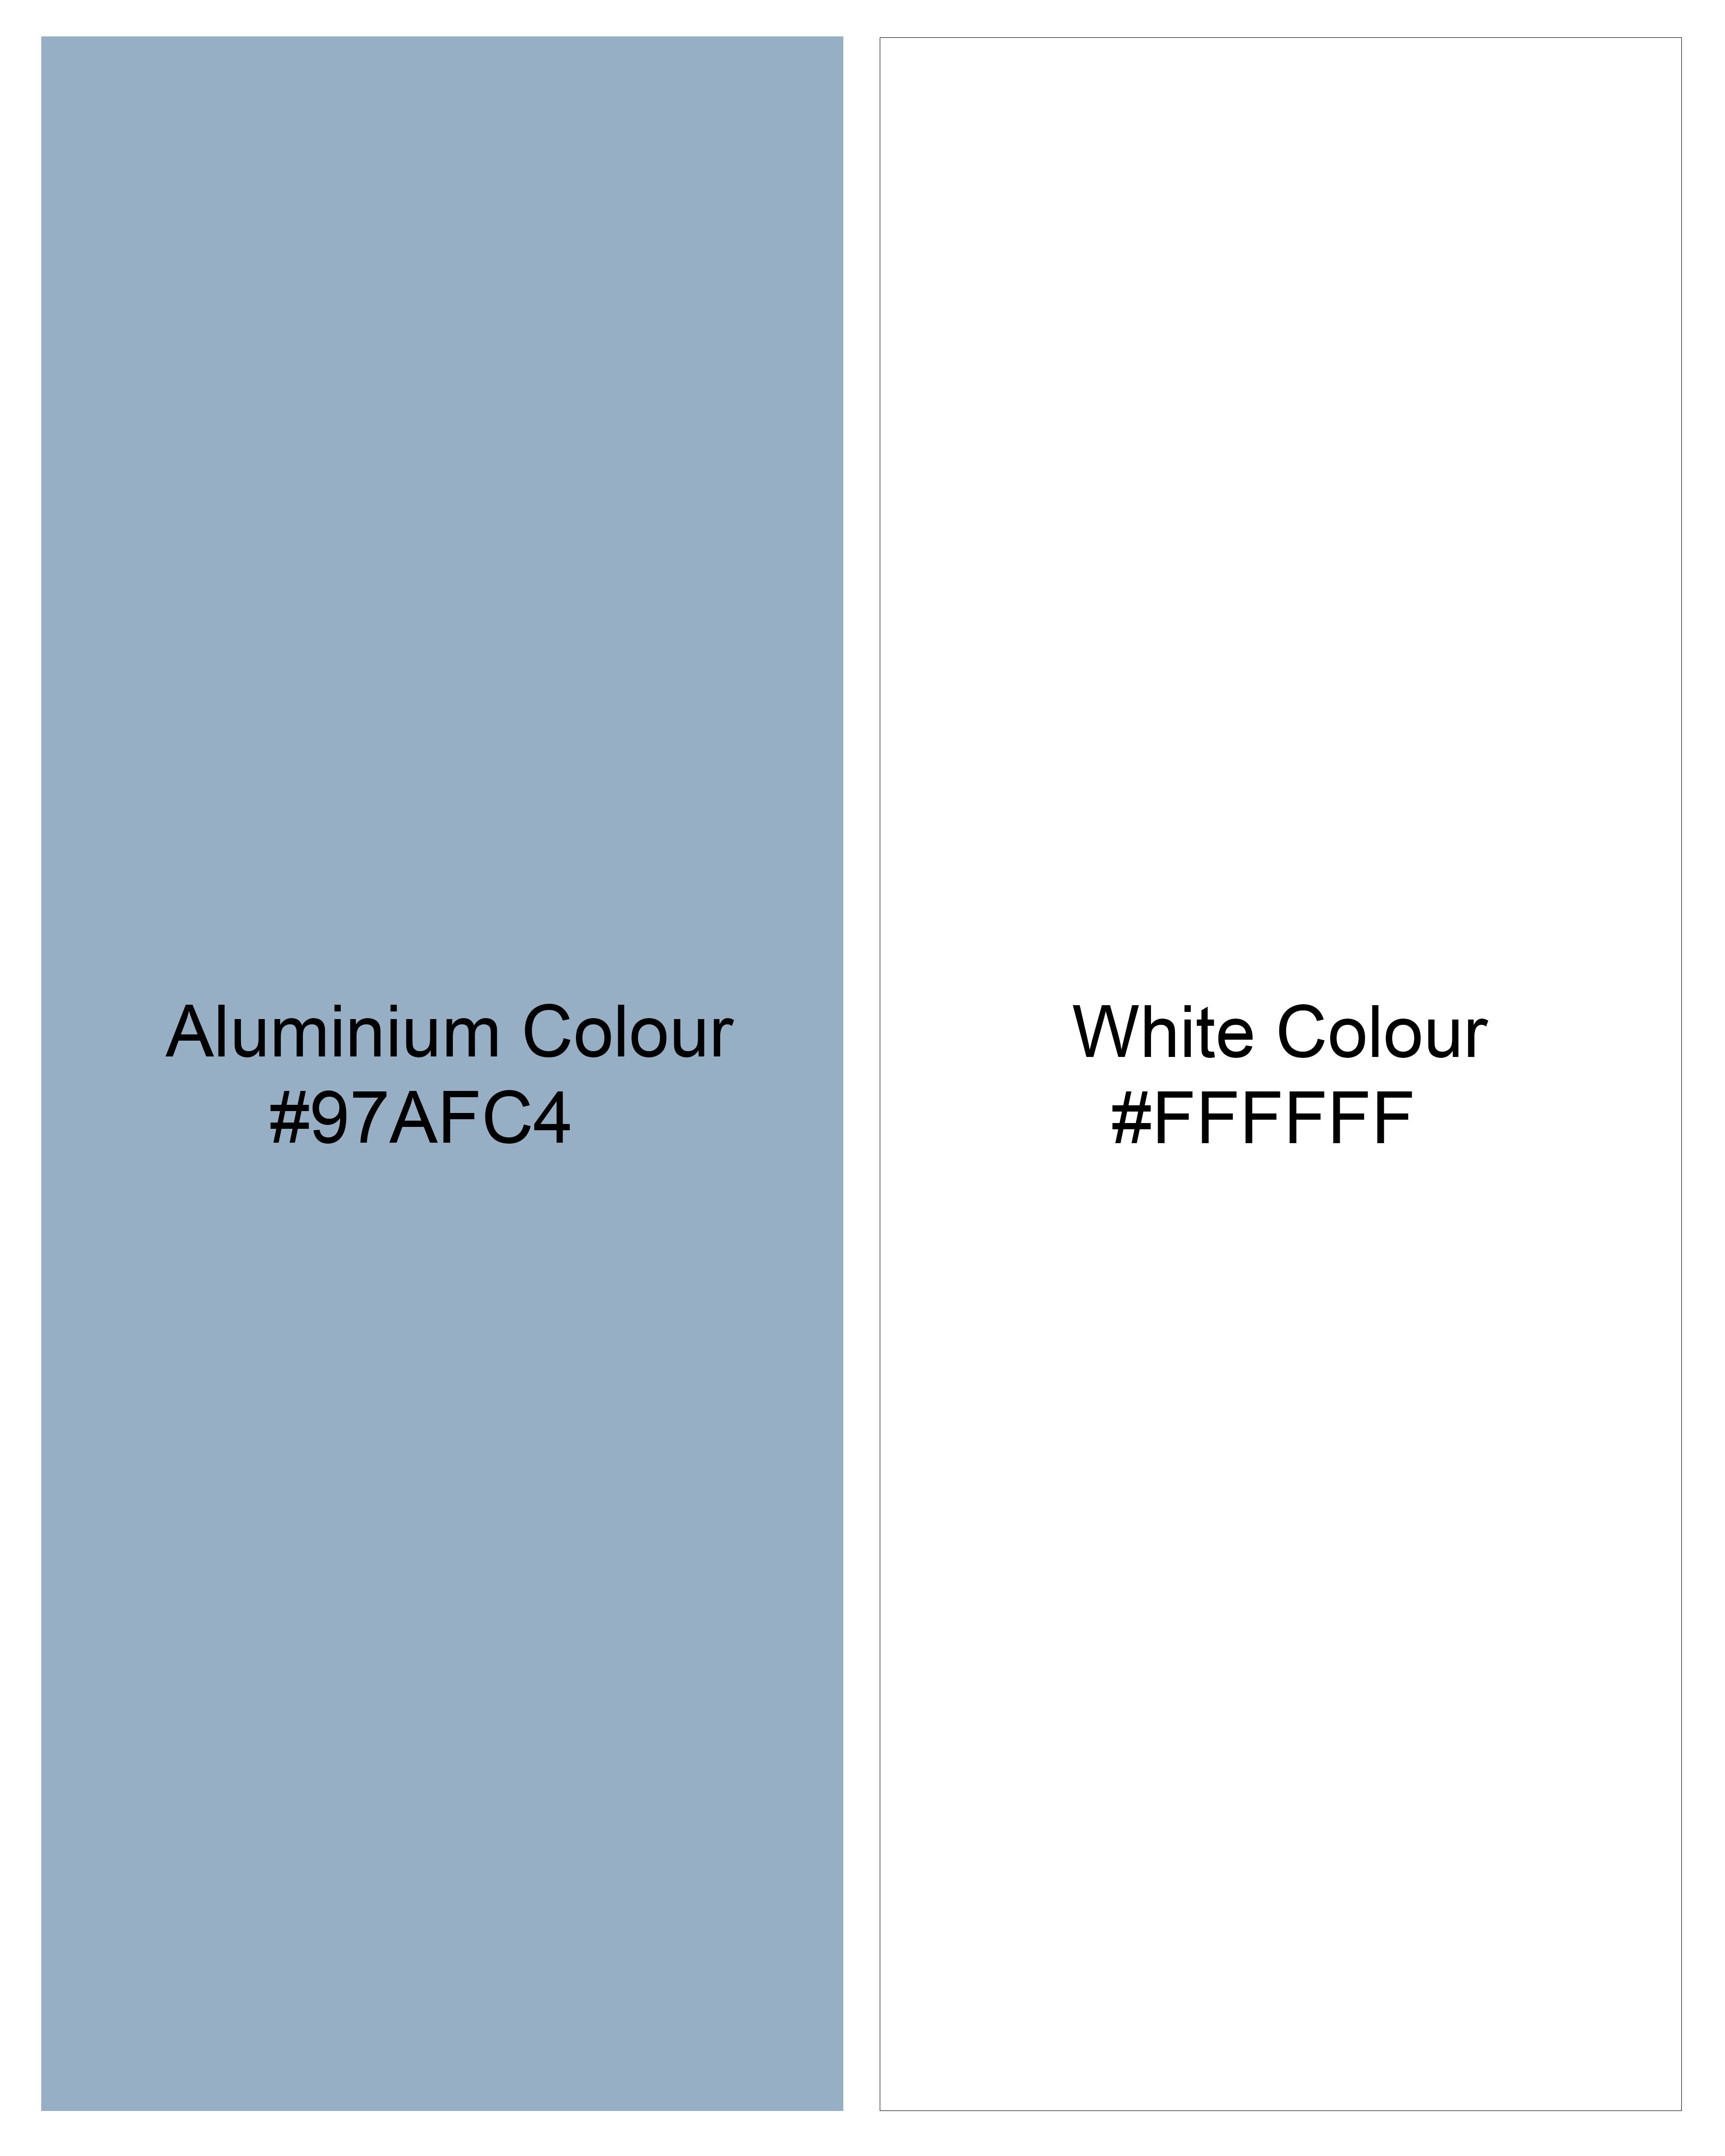 Aluminium Blue and White Floral Printed Premium Cotton Shirt 10010-M-38, 10010-M-H-38, 10010-M-39, 10010-M-H-39, 10010-M-40, 10010-M-H-40, 10010-M-42, 10010-M-H-42, 10010-M-44, 10010-M-H-44, 10010-M-46, 10010-M-H-46, 10010-M-48, 10010-M-H-48, 10010-M-50, 10010-M-H-50, 10010-M-52, 10010-M-H-52